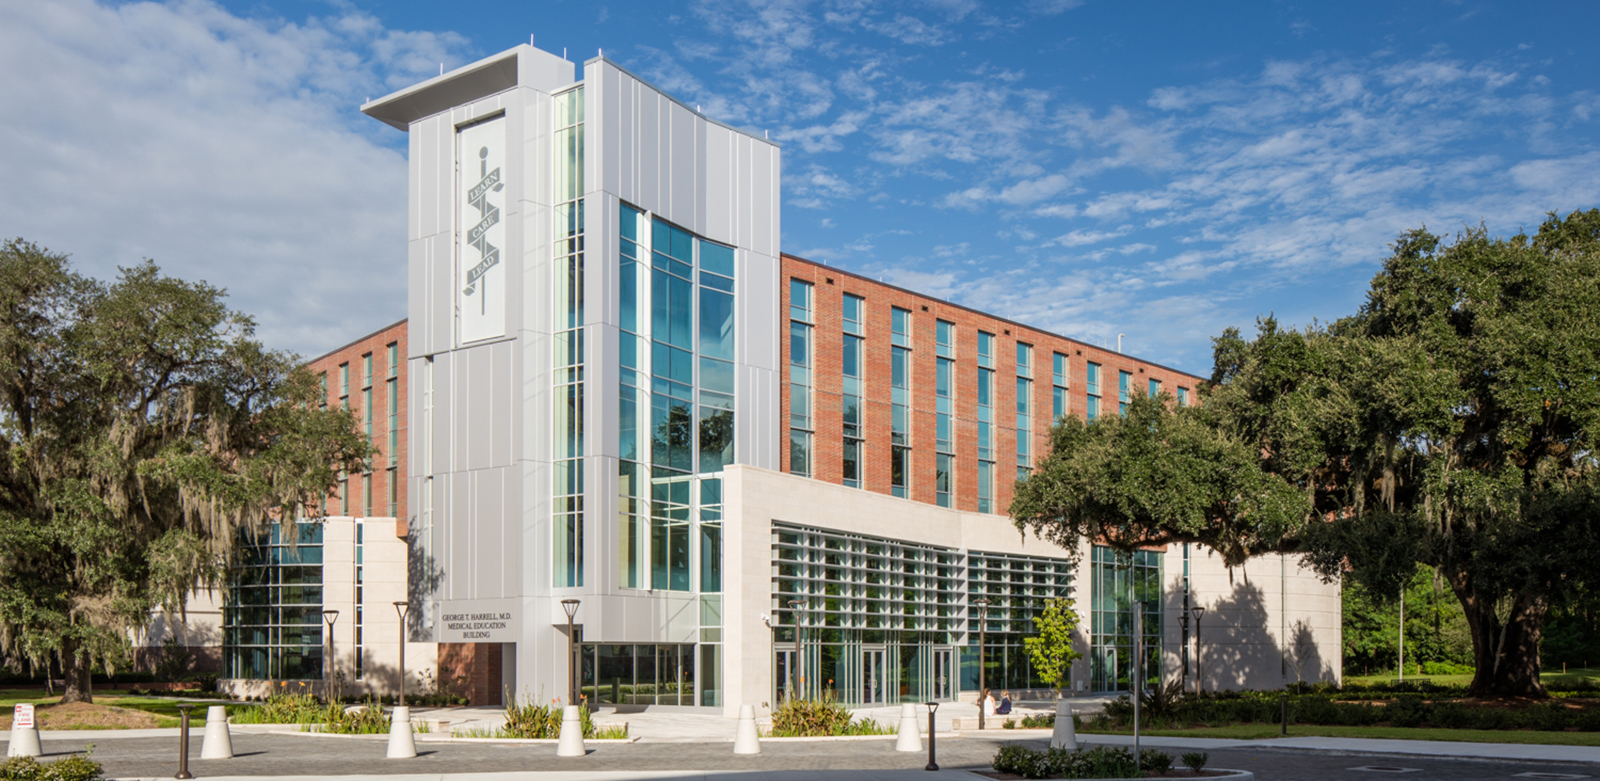 University of Florida, Harrell Medical Education Building